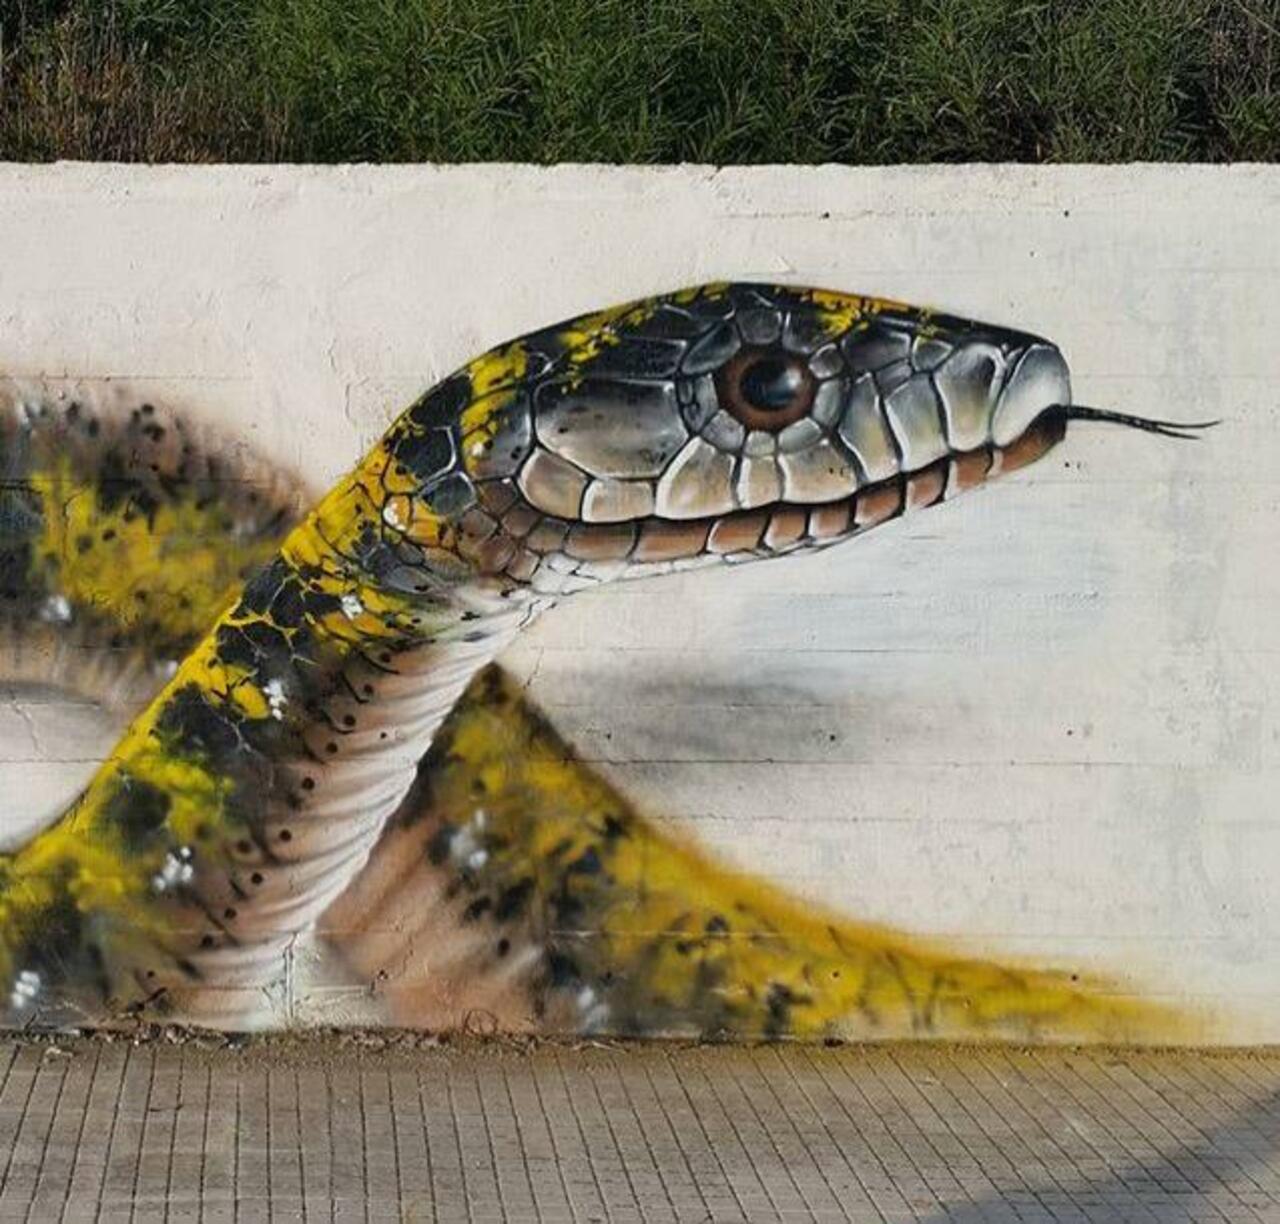 Street Art by Cosimocheone 

#art #graffiti #mural #streetart http://t.co/fXRi83UdVe